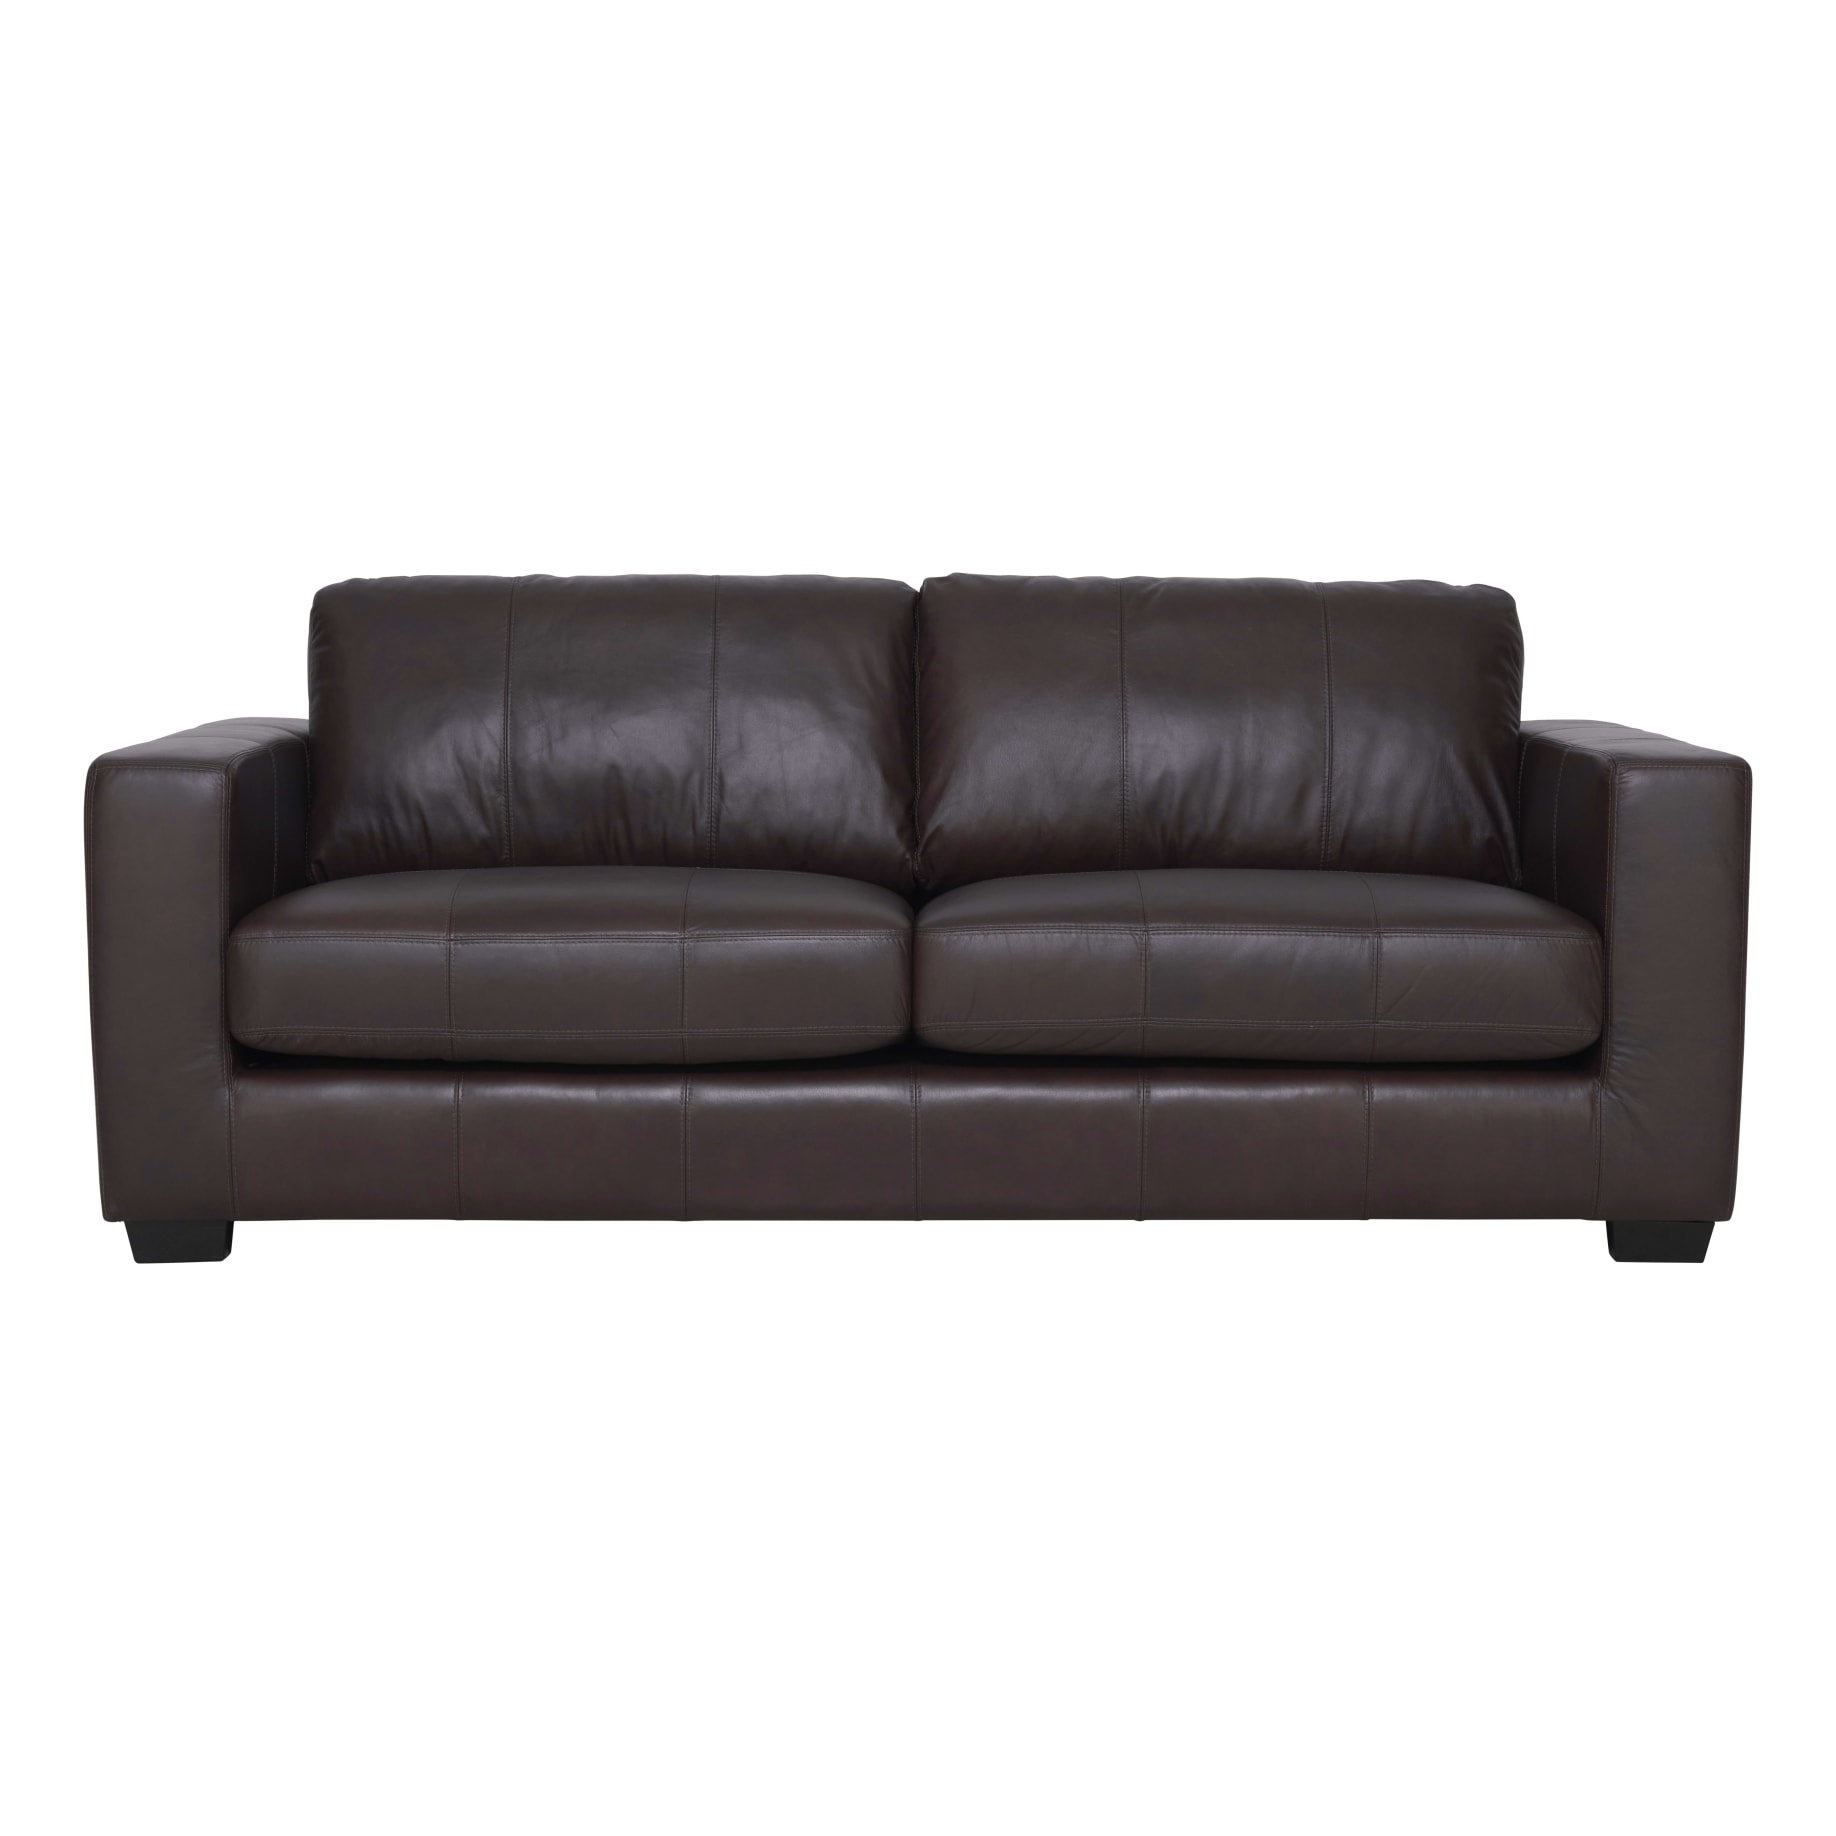 Gordon 3 Seater Sofa in Aniline Leather Dark Chocolate